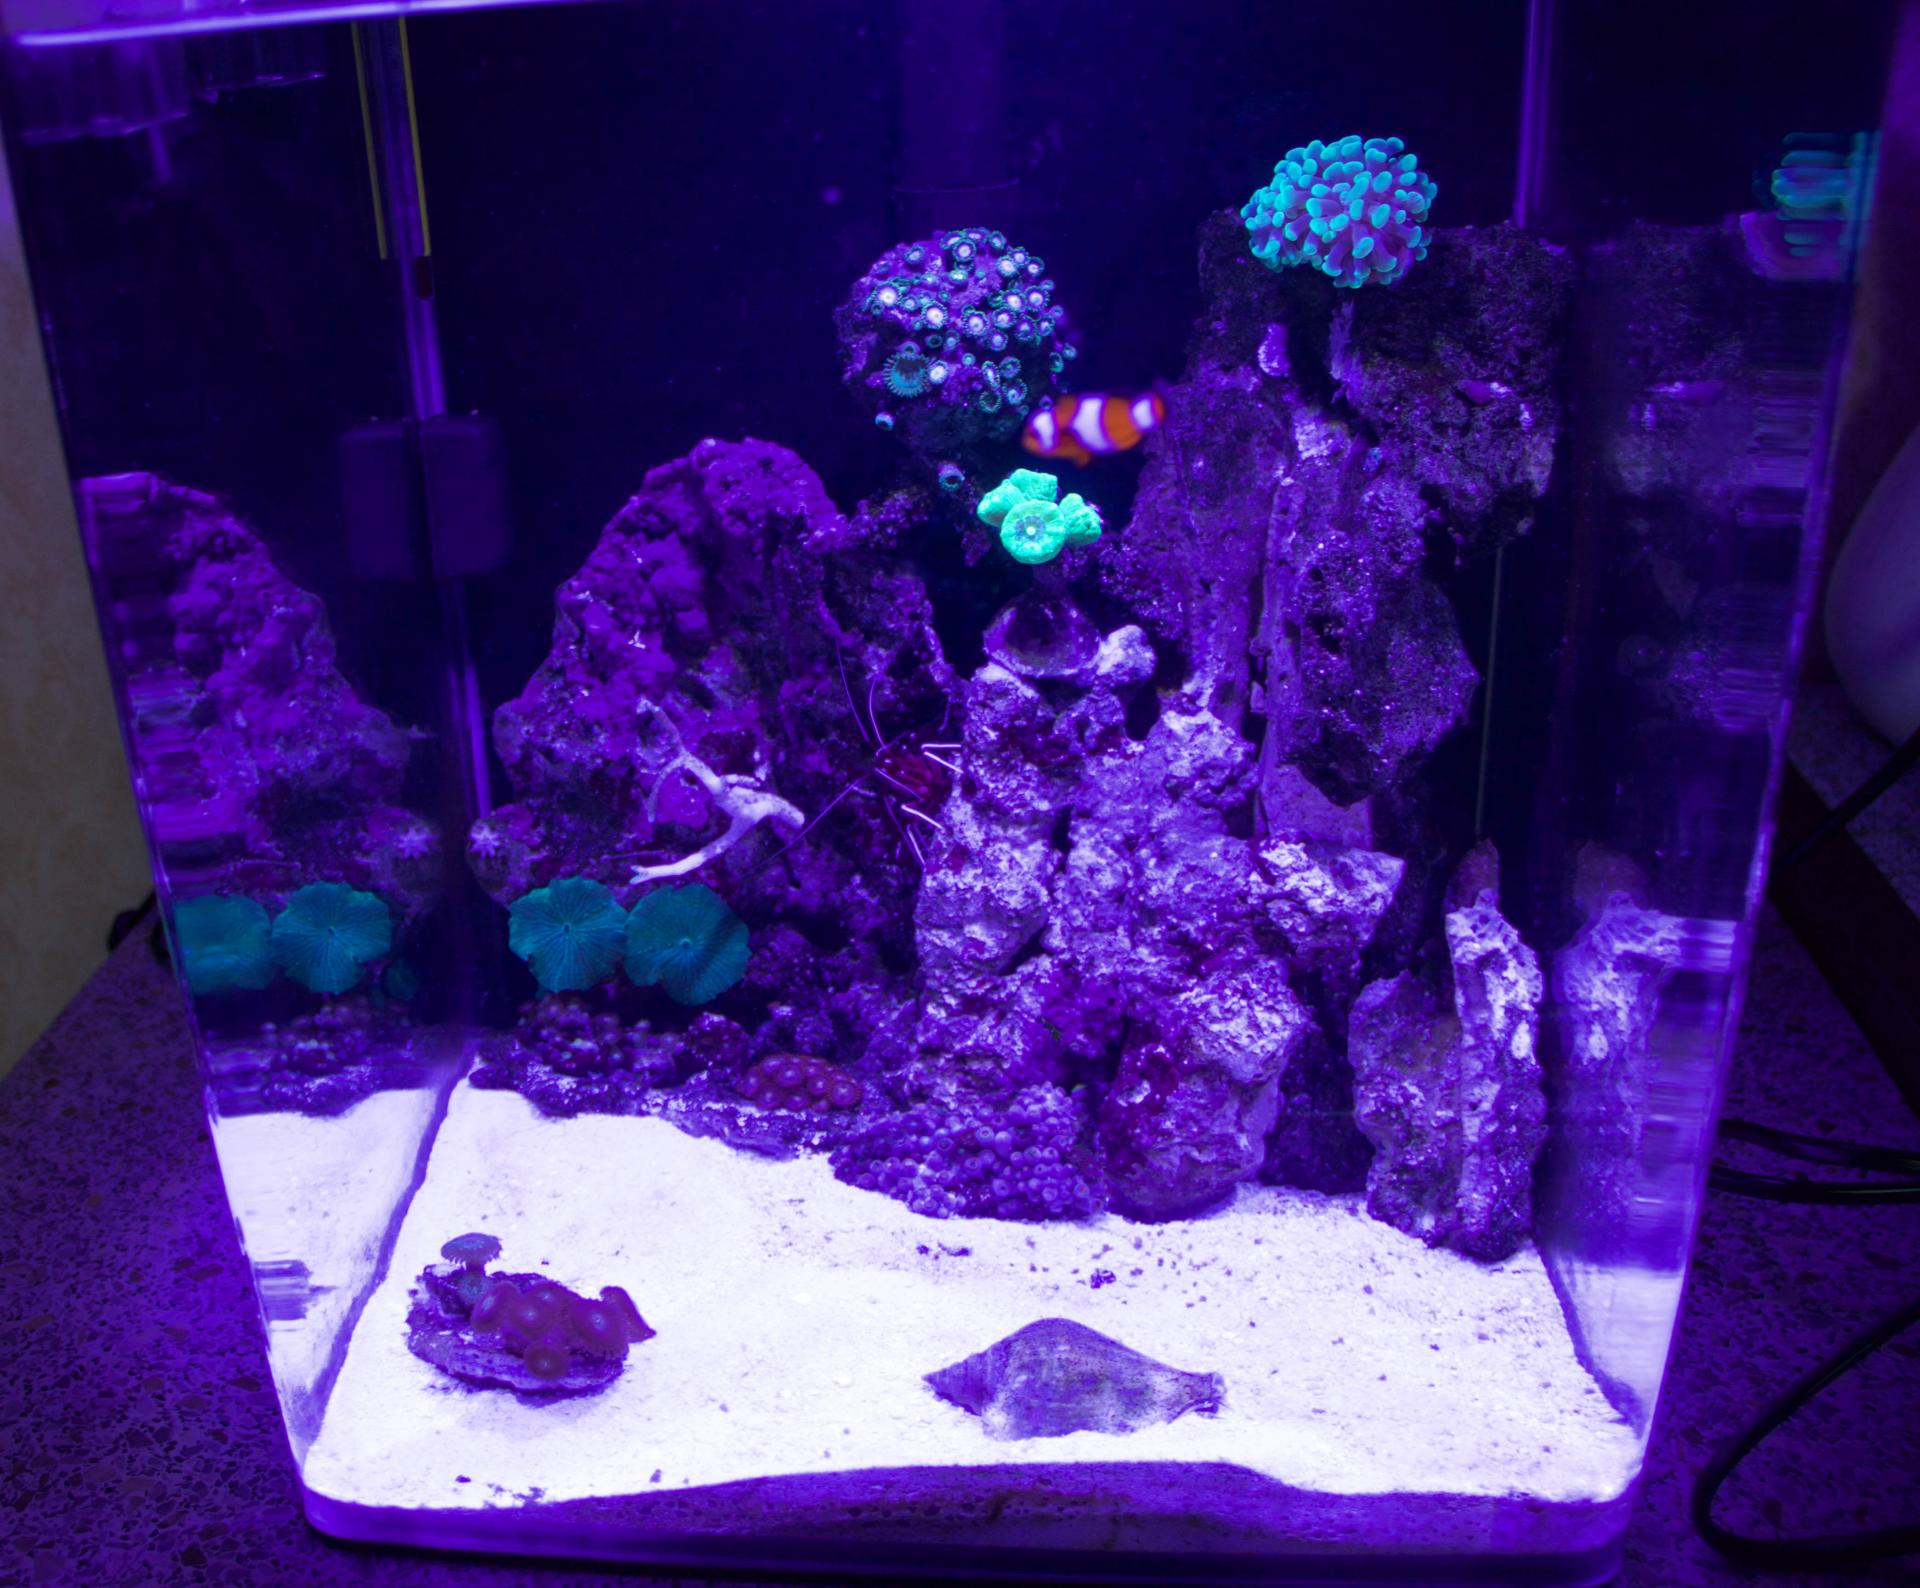 морской аквариум 30 литров